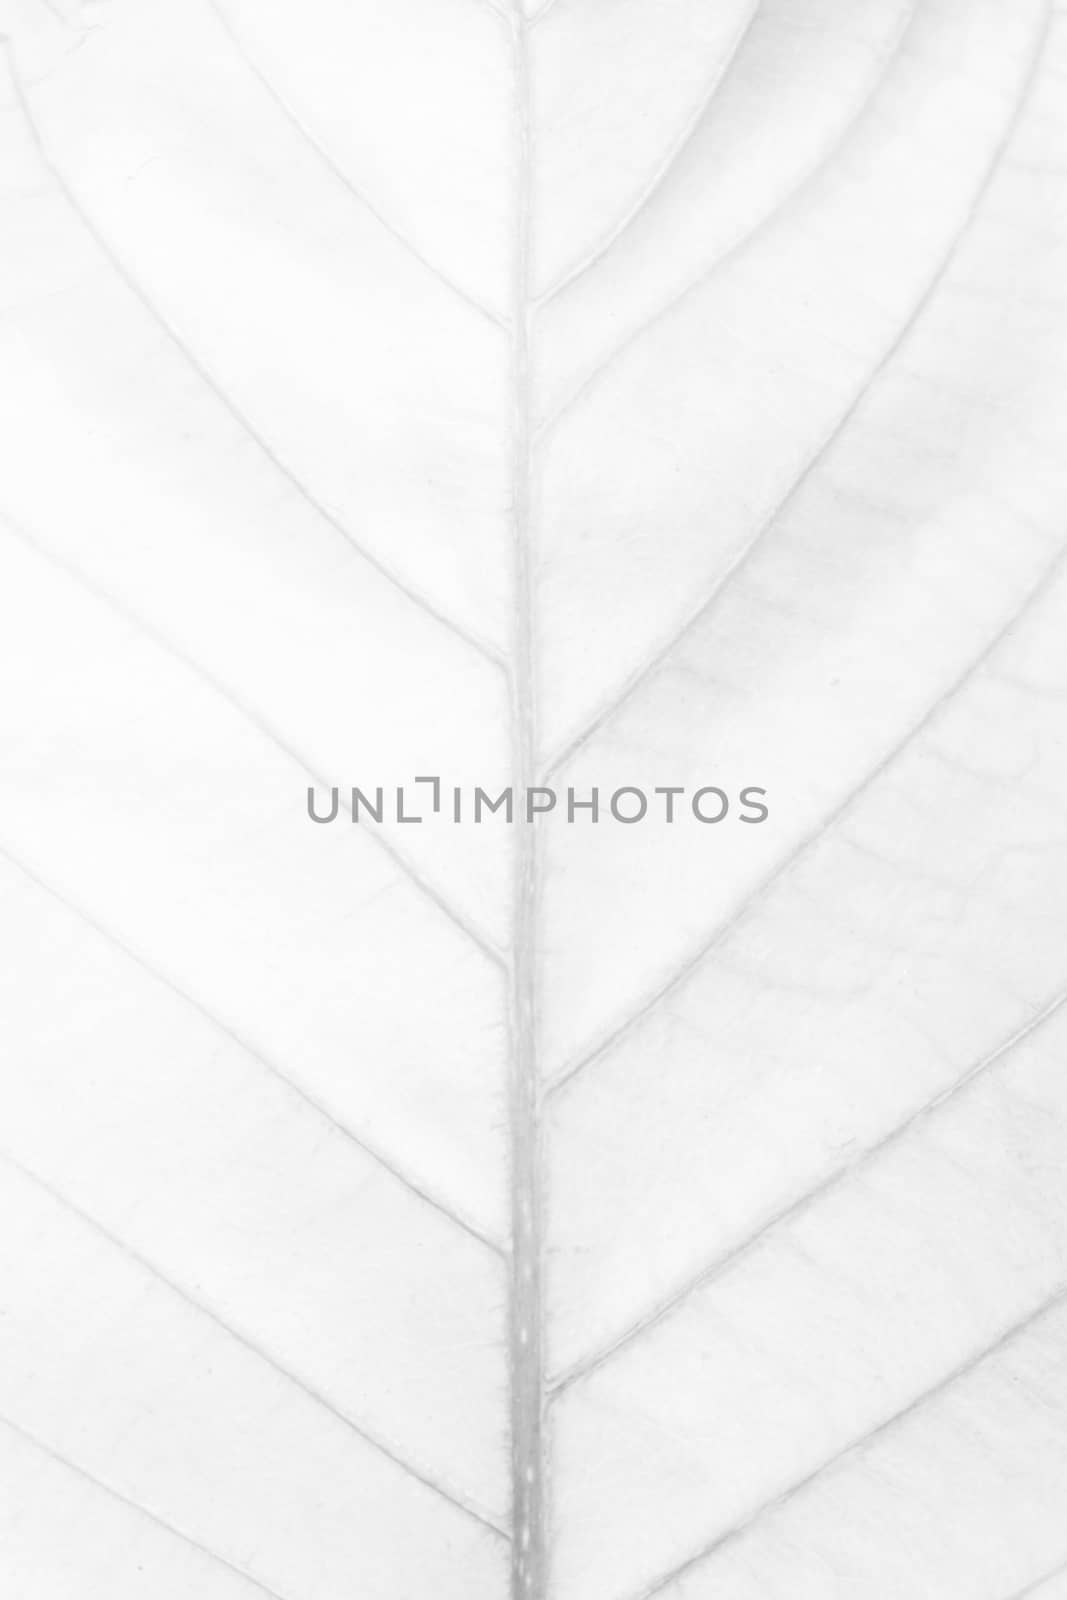 White leaf Texture Background.